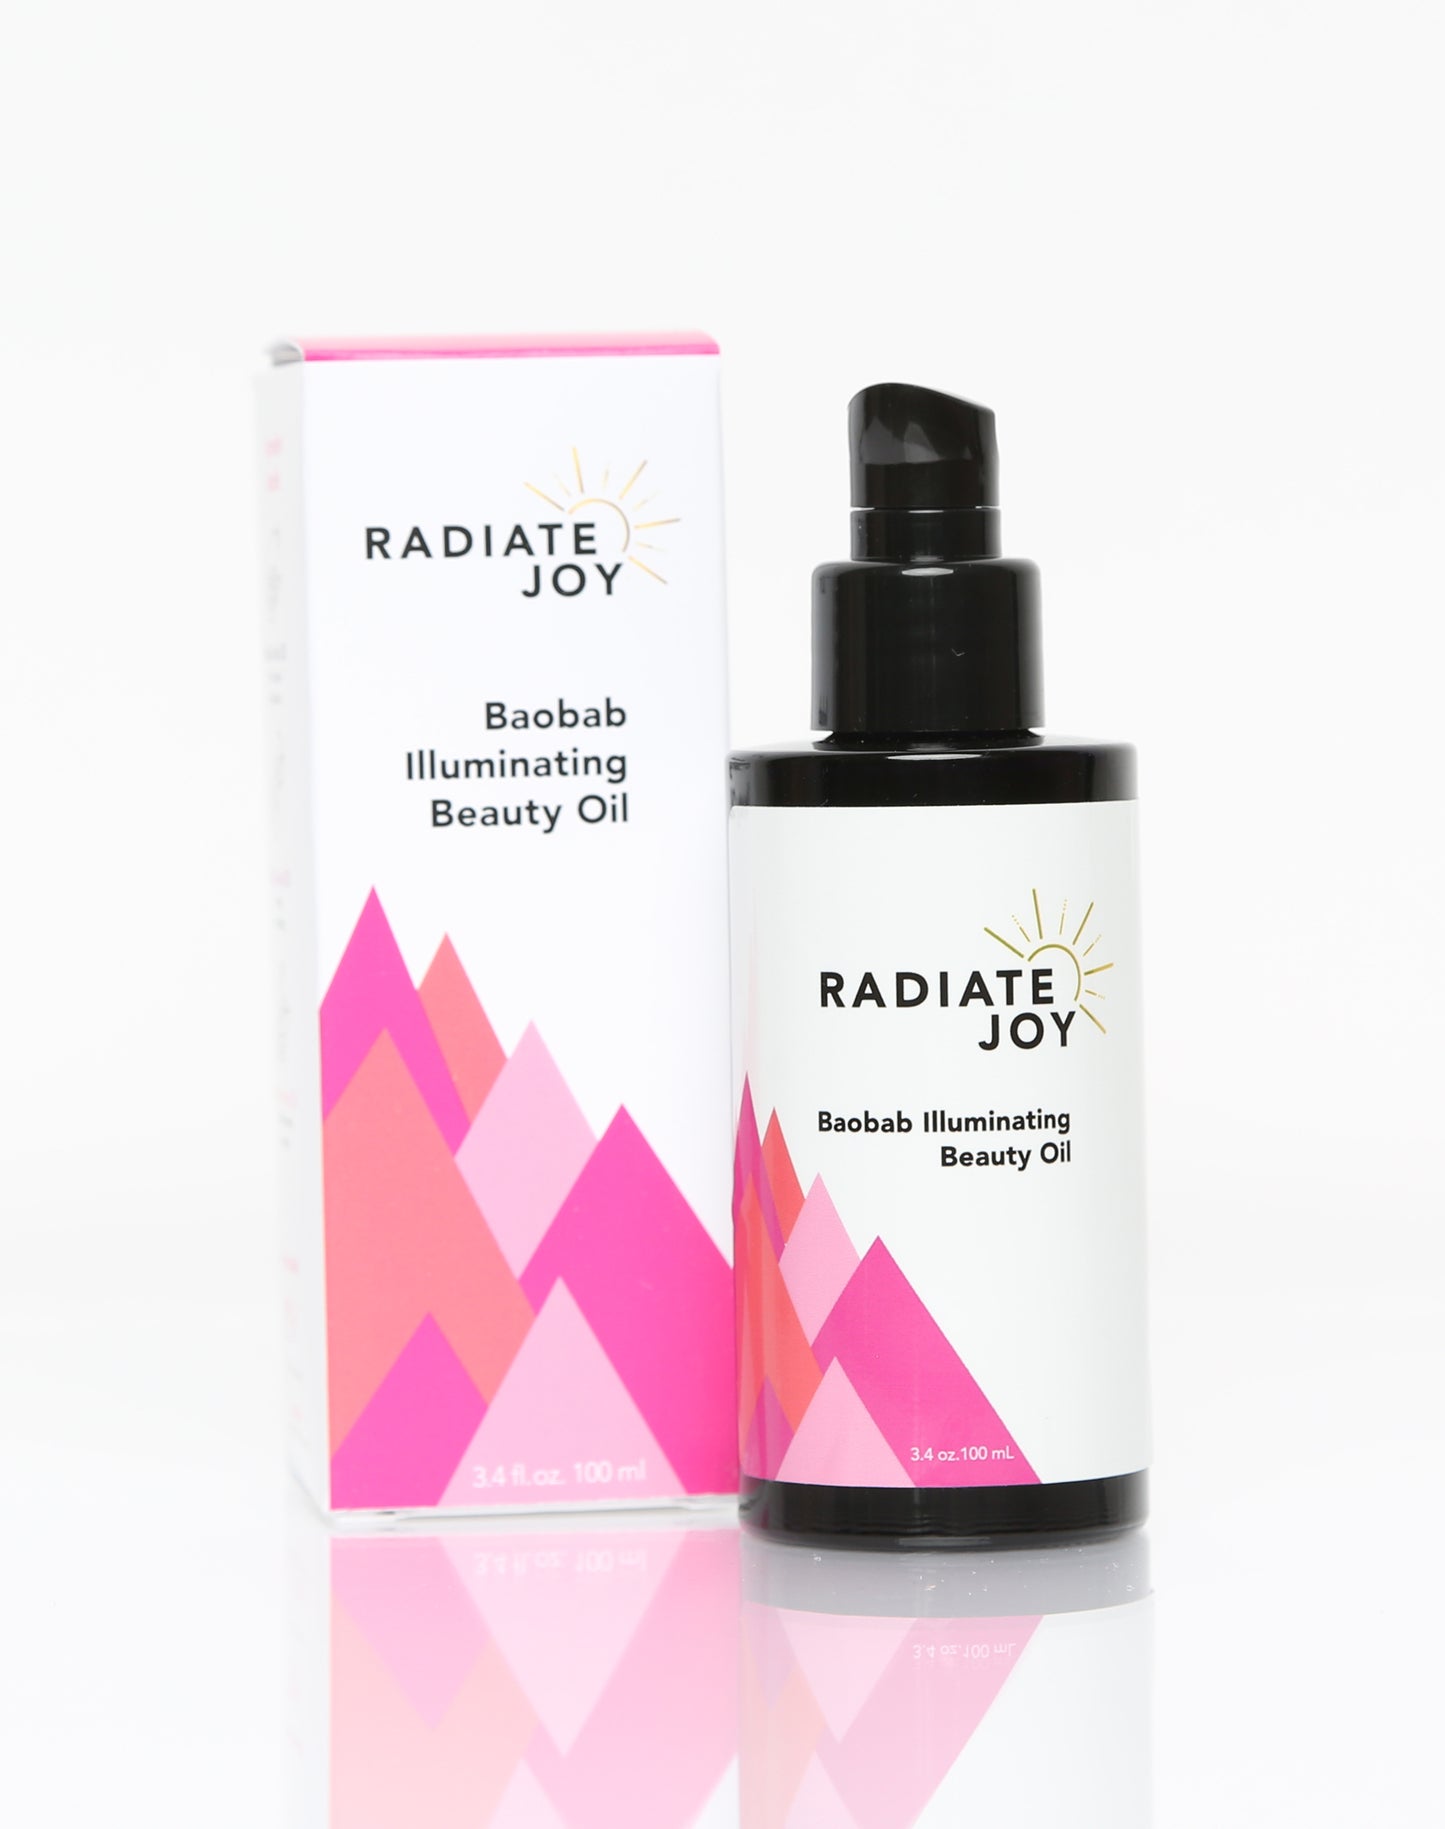 Baobab Illuminating Beauty Oil